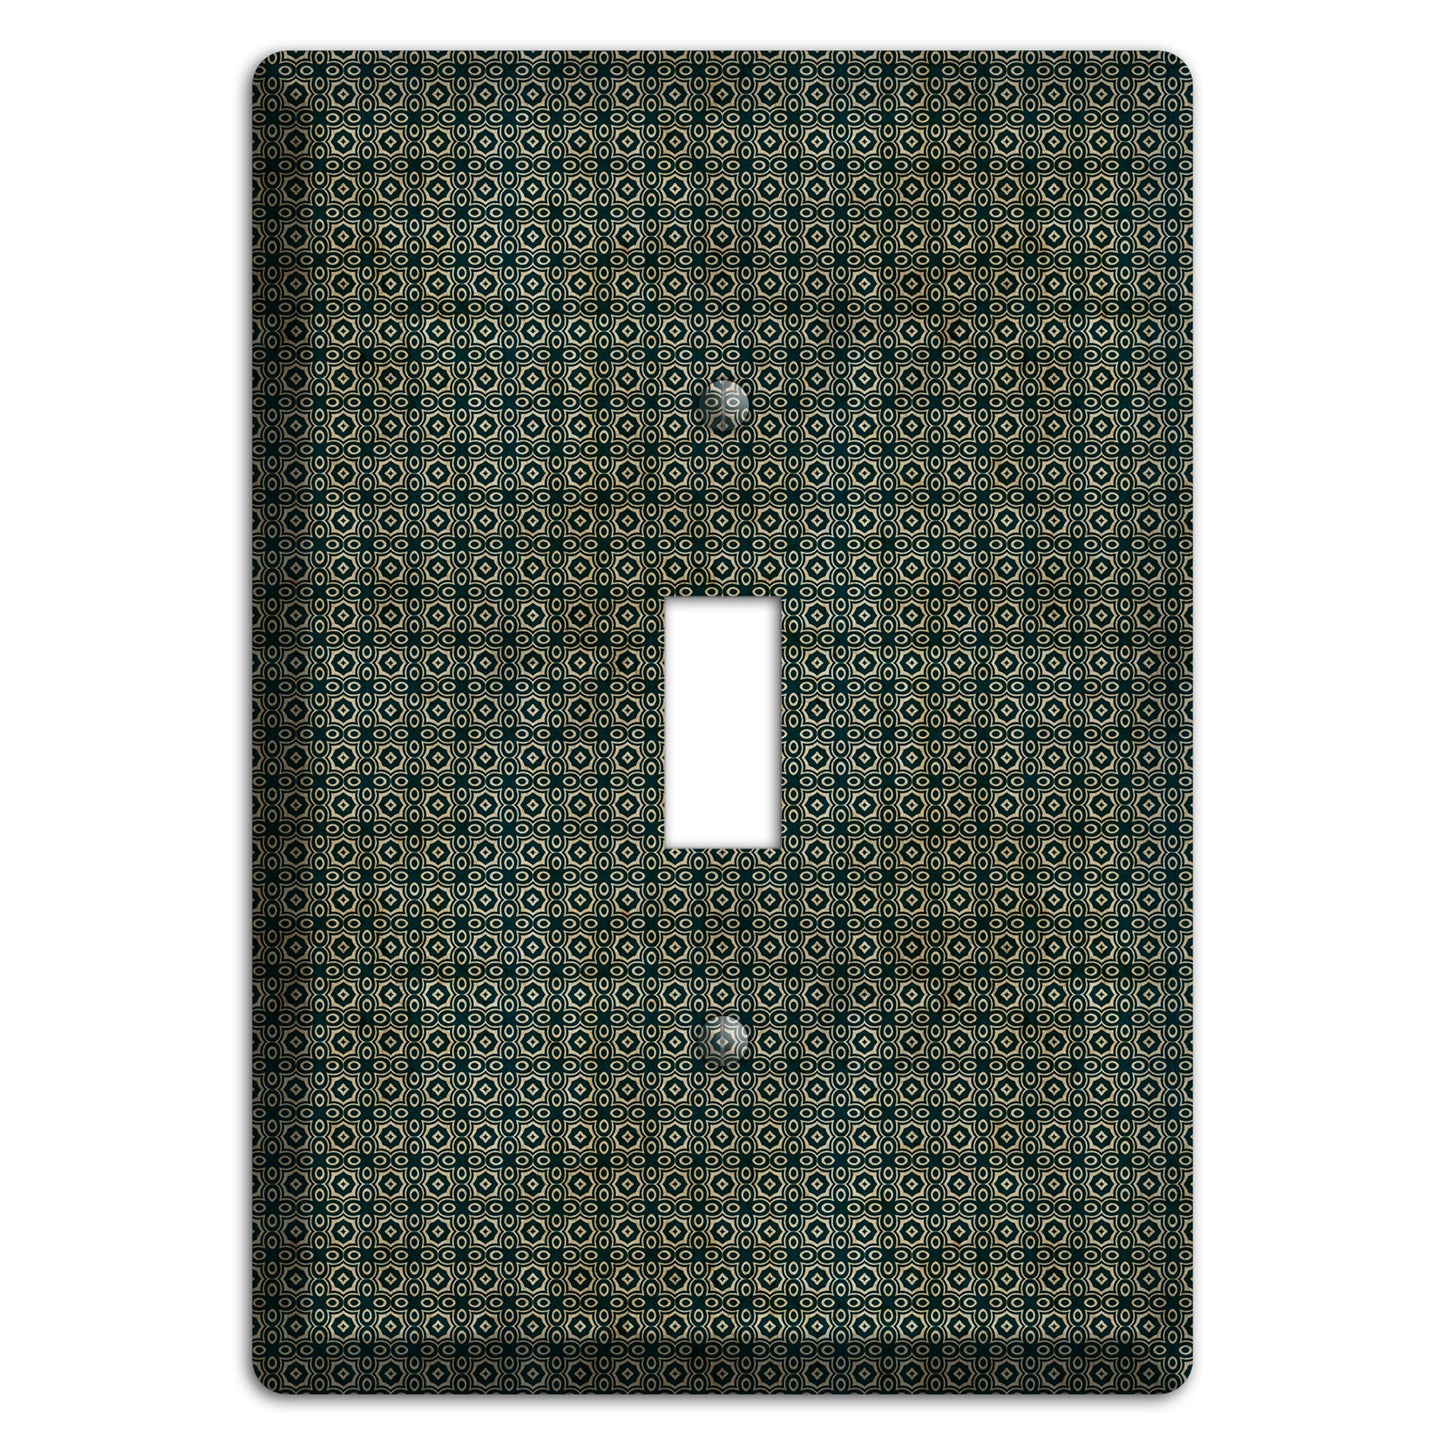 Dark Green Grunge Tiny Tiled Tapestry Cover Plates